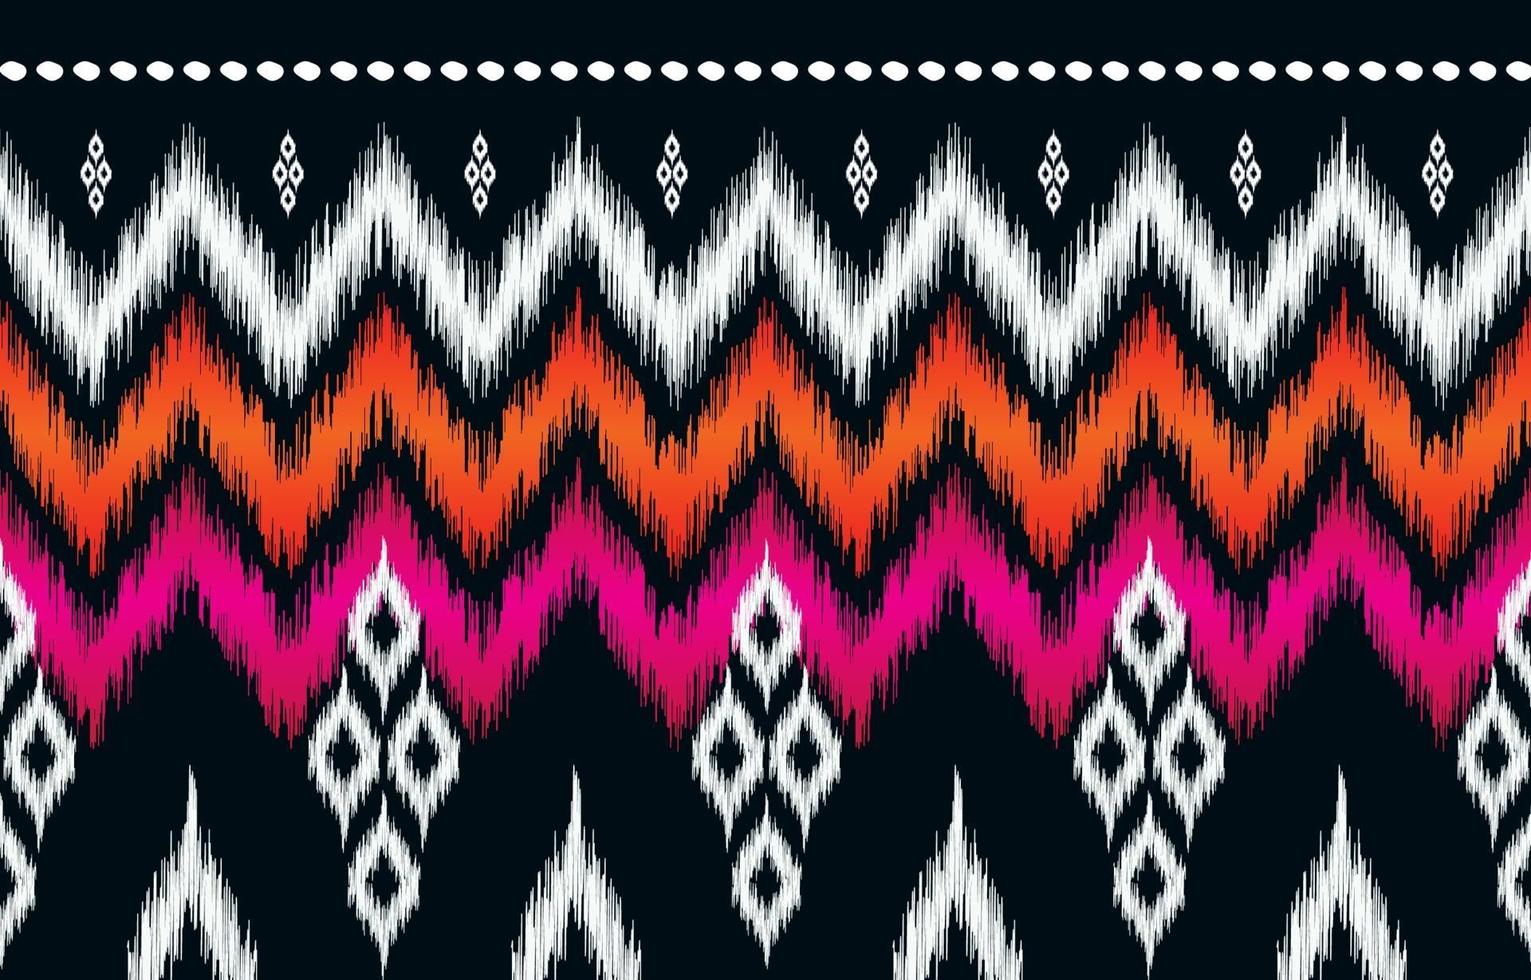 Diseño de fondo tradicional de patrón étnico oriental abstracto para papel tapiz, tela, textil, alfombra, batik. vector